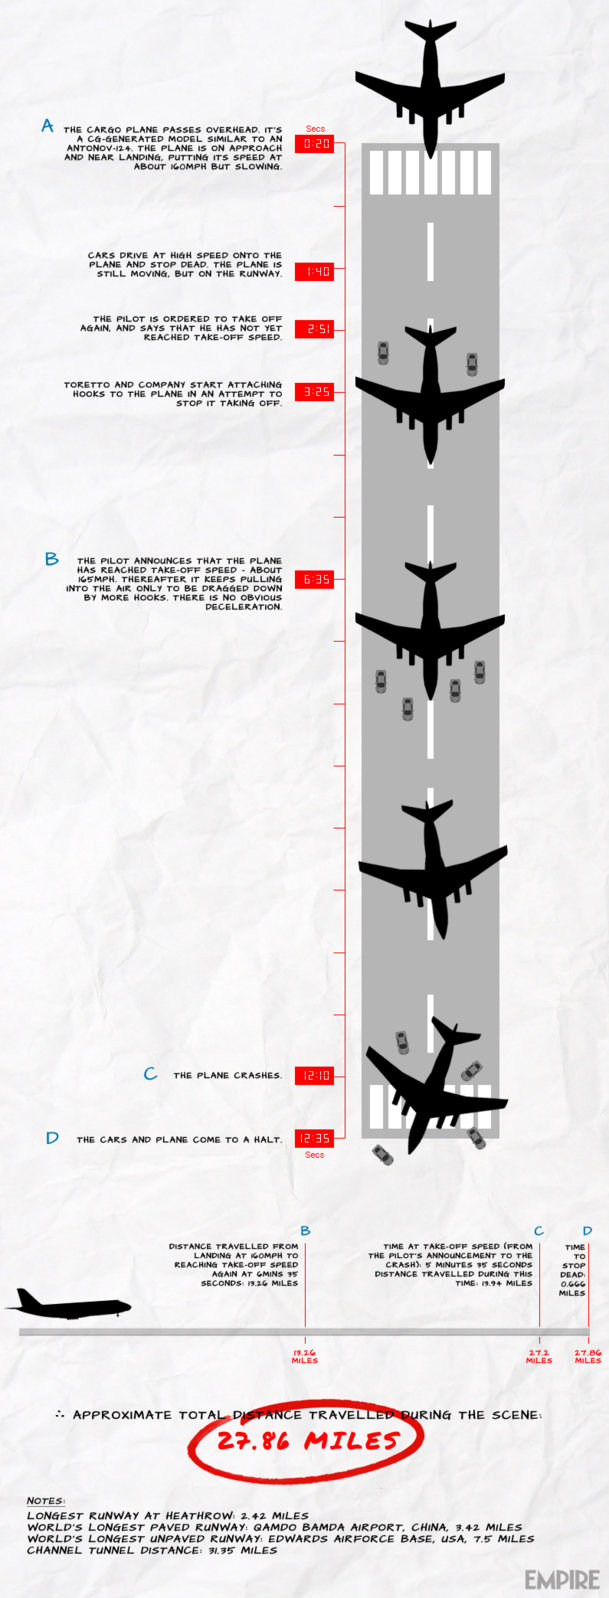 fast-and-furious-6-runway-length.jpg